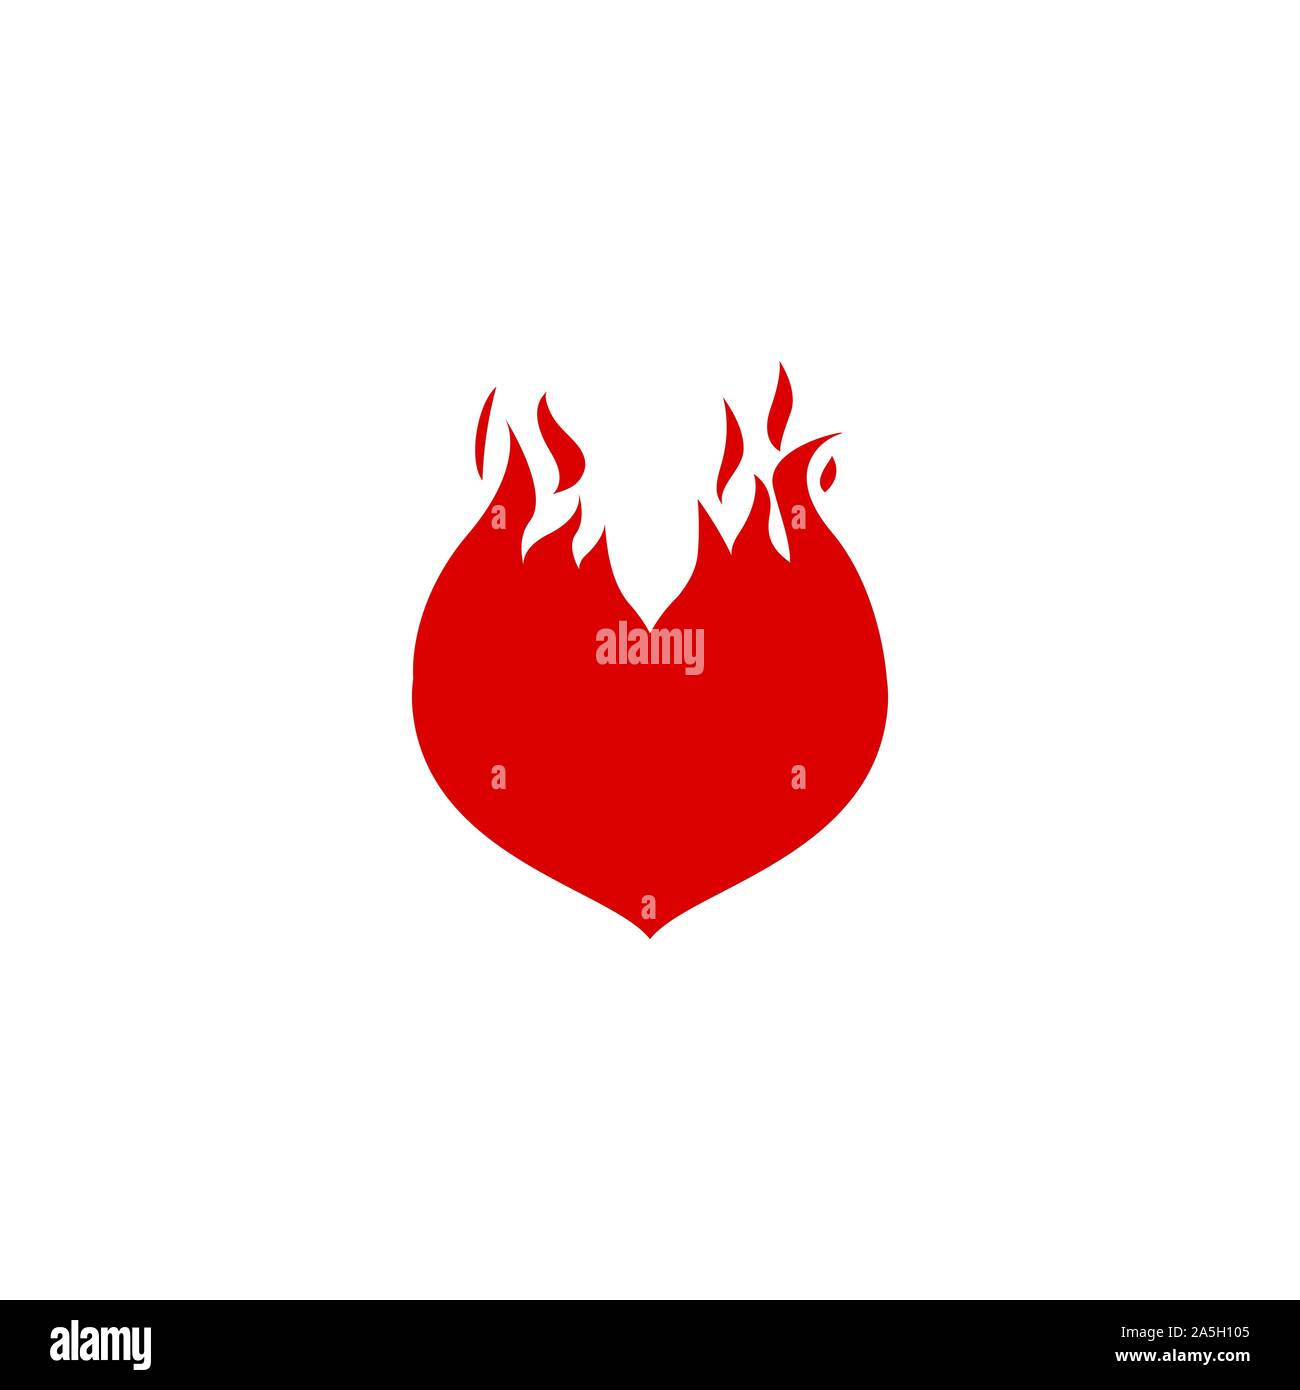 Burning Hearts Tattoo Co burningheartstattoo  Instagram photos and  videos